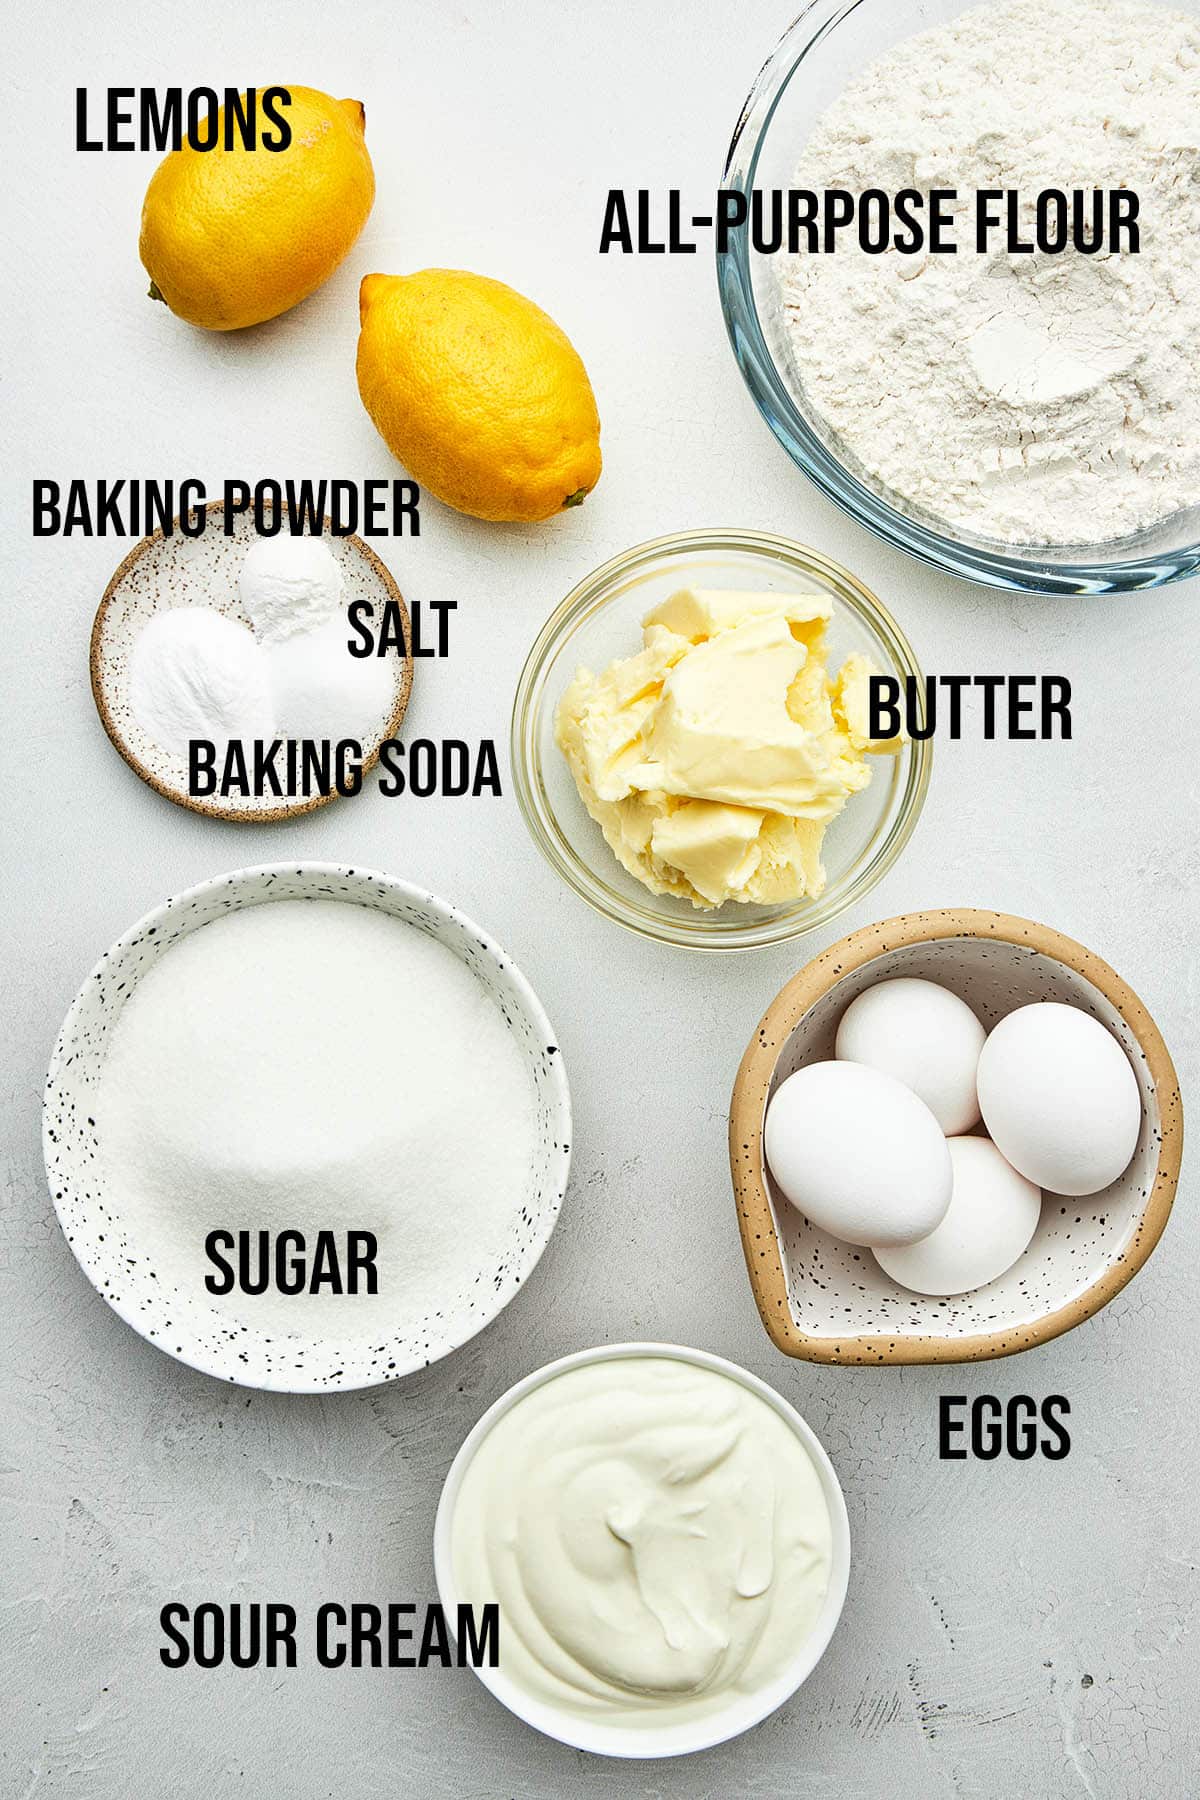 Lemon sour cream bundt cake ingredients with labels.